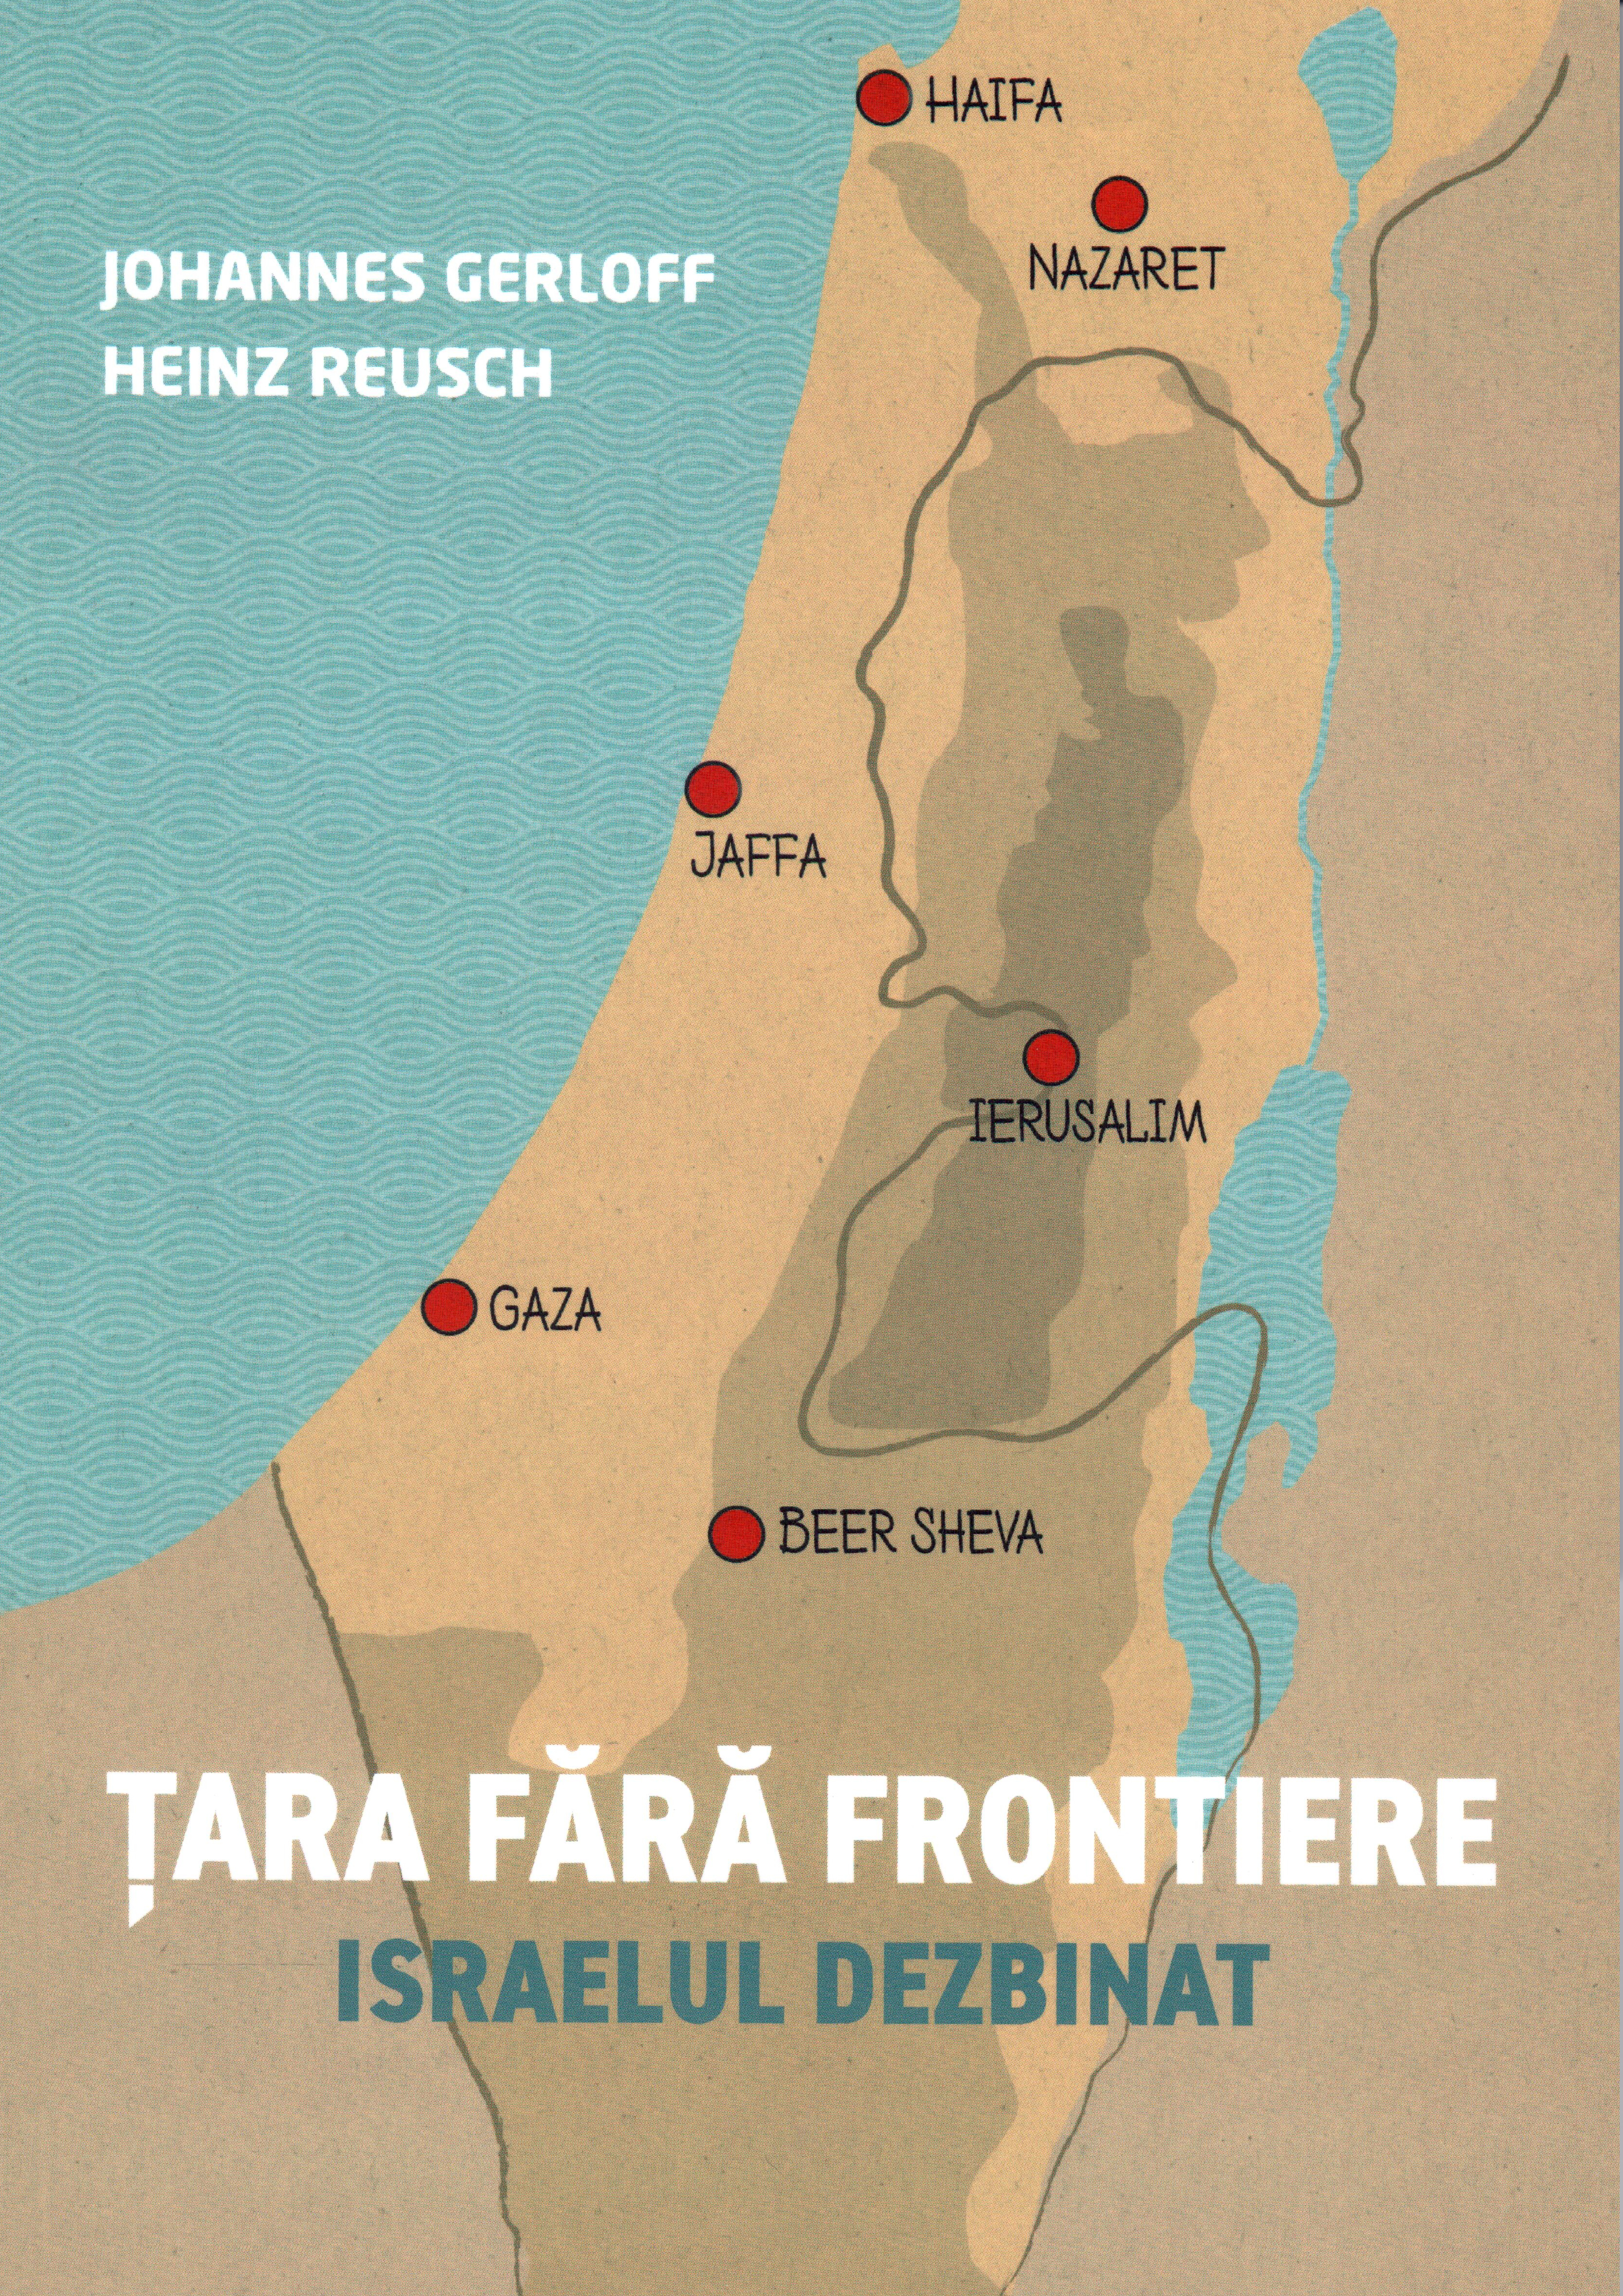 Tara fara frontiere - Israelul dezbinat